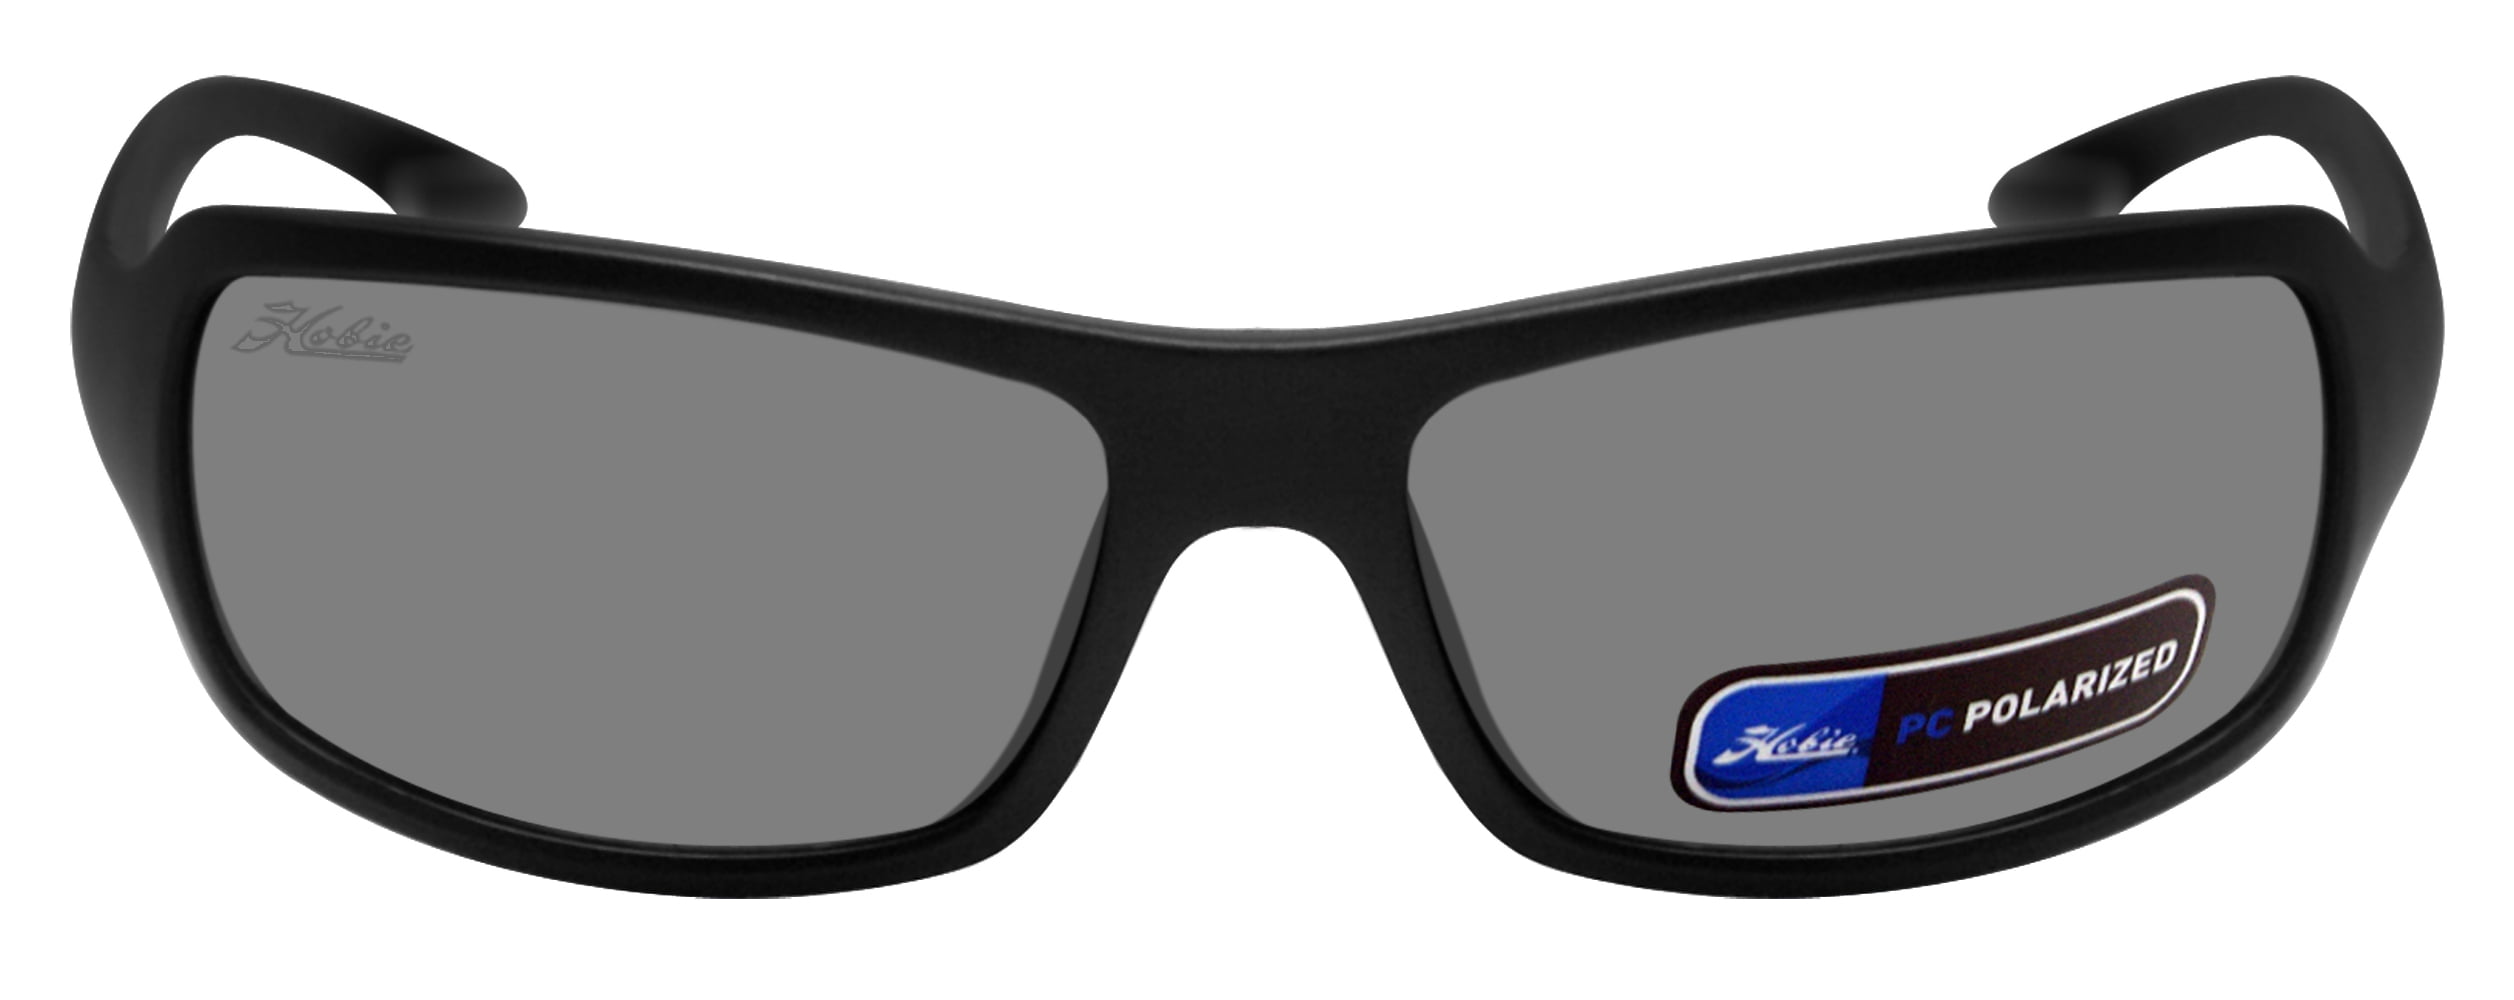 Hobie Malibu Polarized Sport Sunglasses 